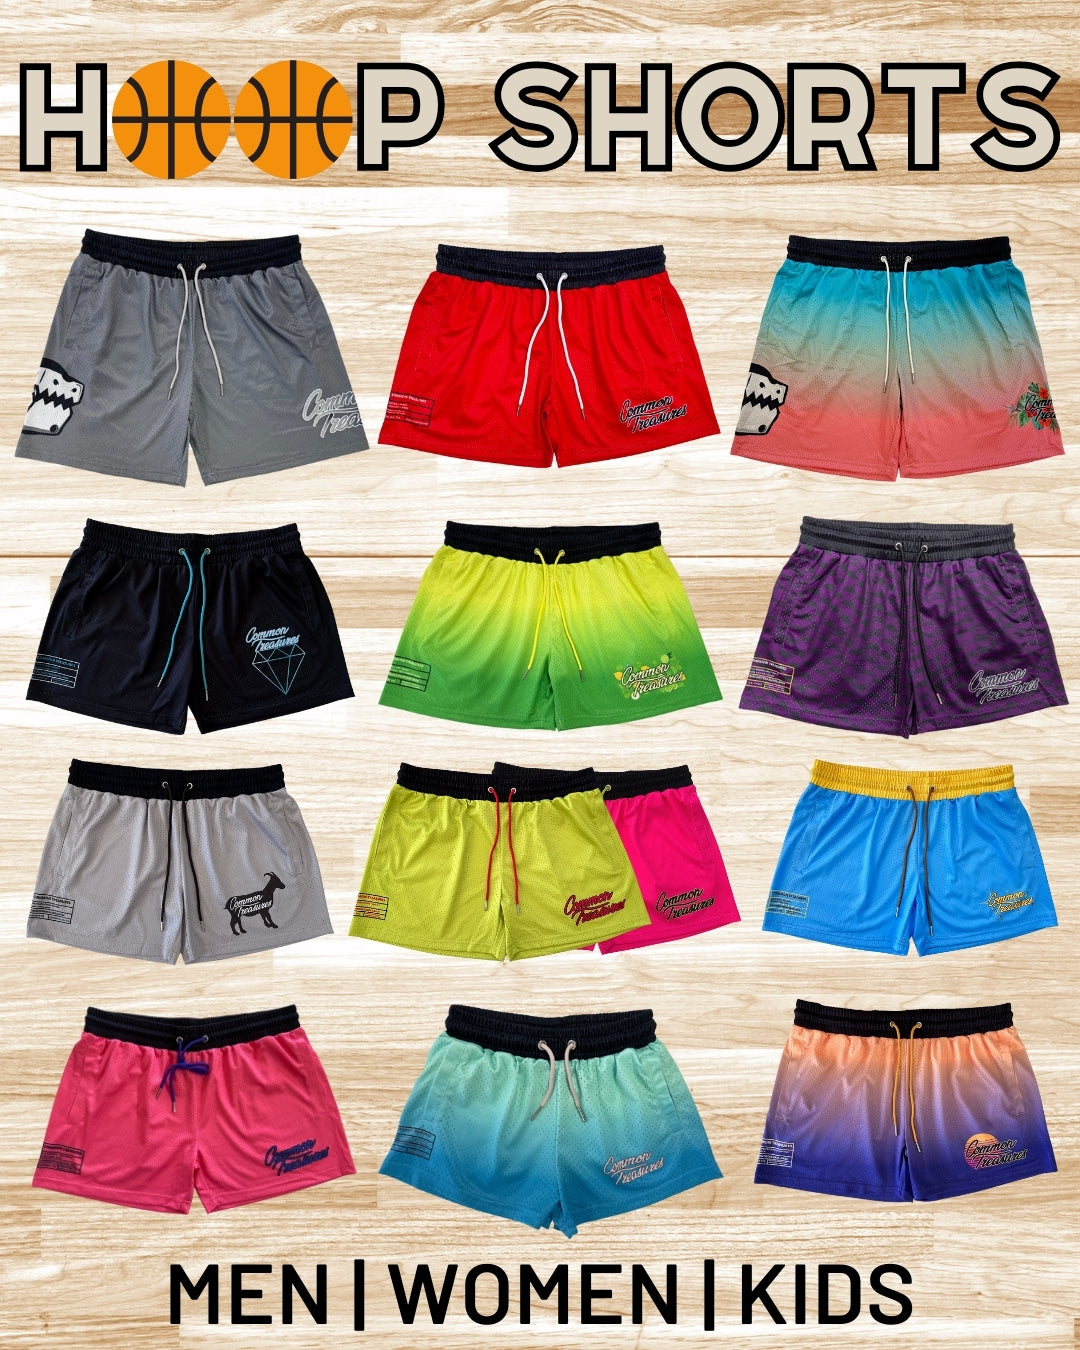 Hoop Shorts